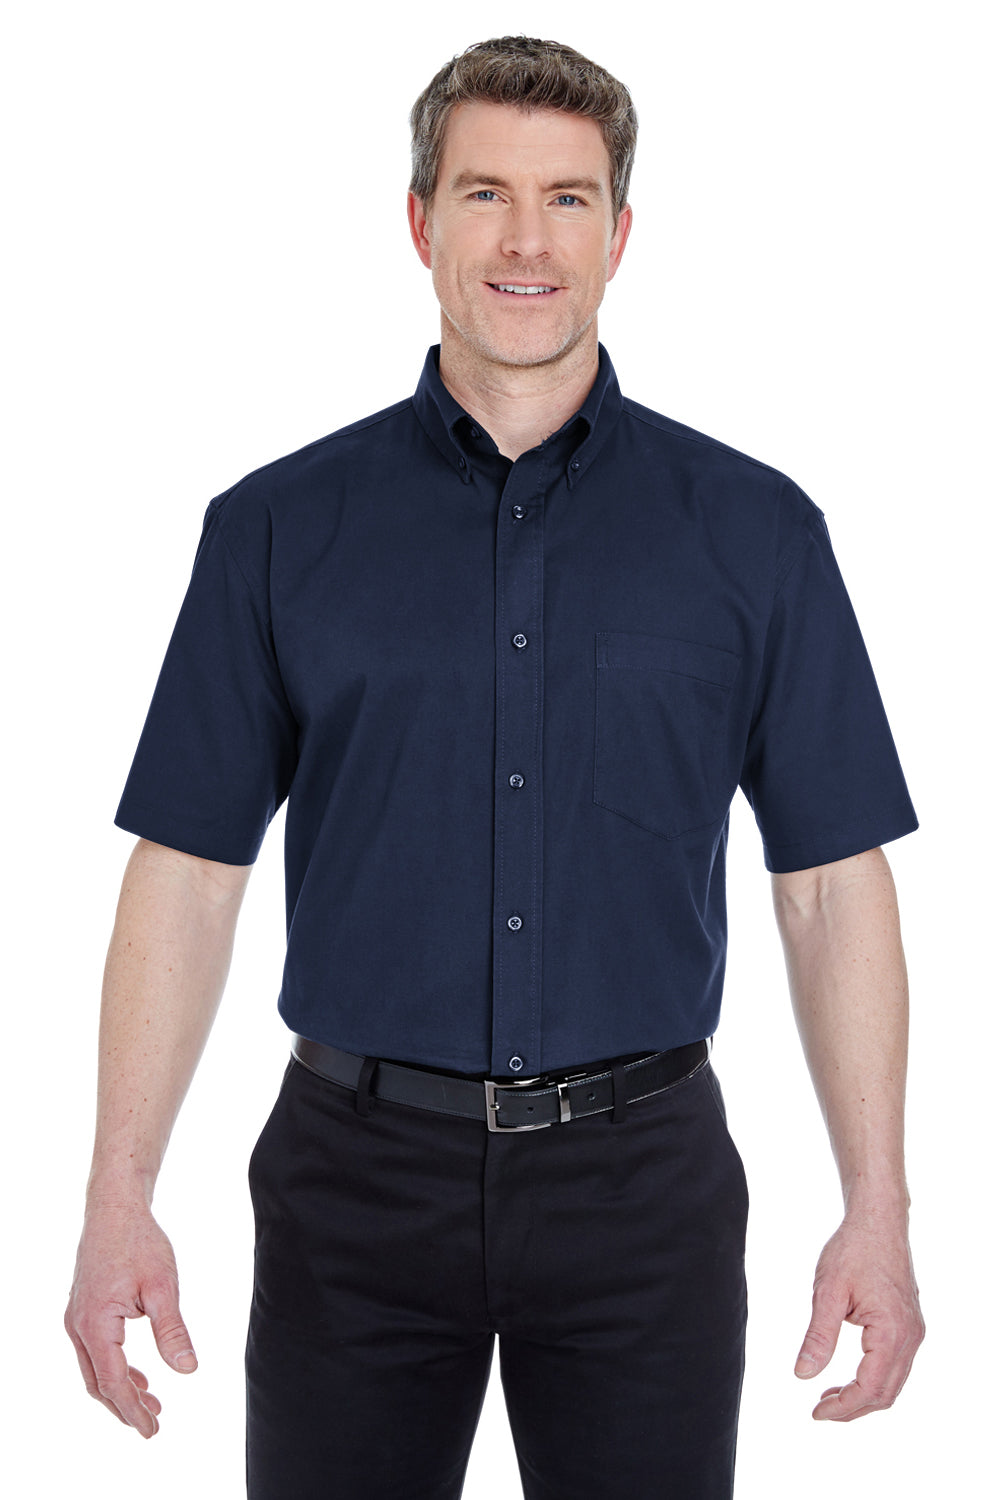 UltraClub 8977 Mens Whisper Short Sleeve Button Down Shirt w/ Pocket Navy Blue Front